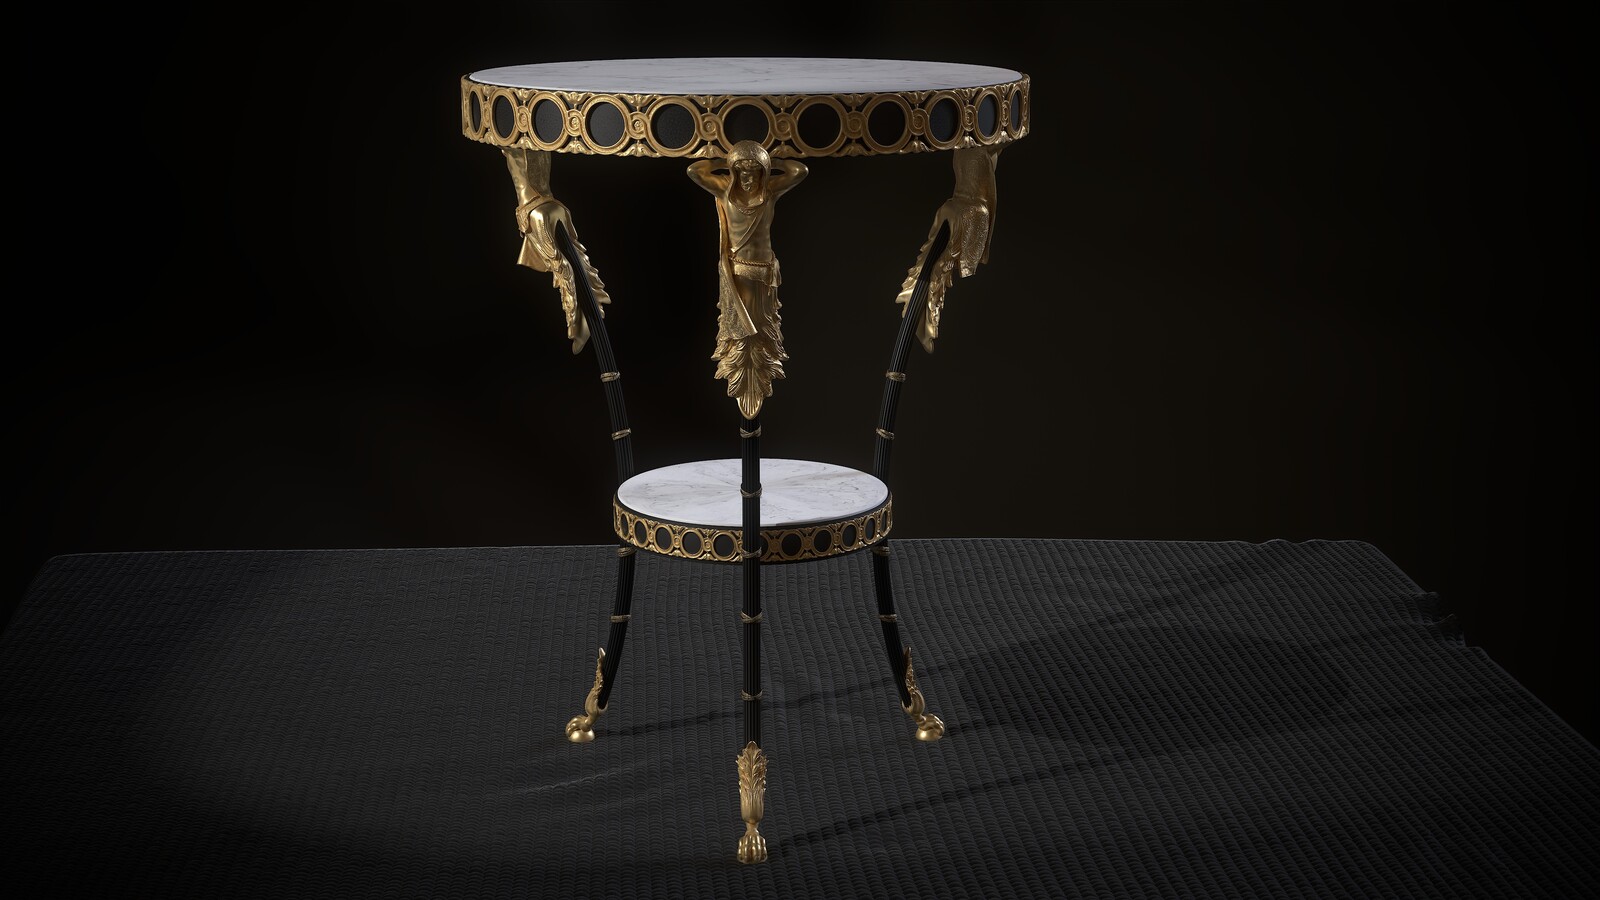 Royal Table / 24-carat gilded bronze - gun metal finish